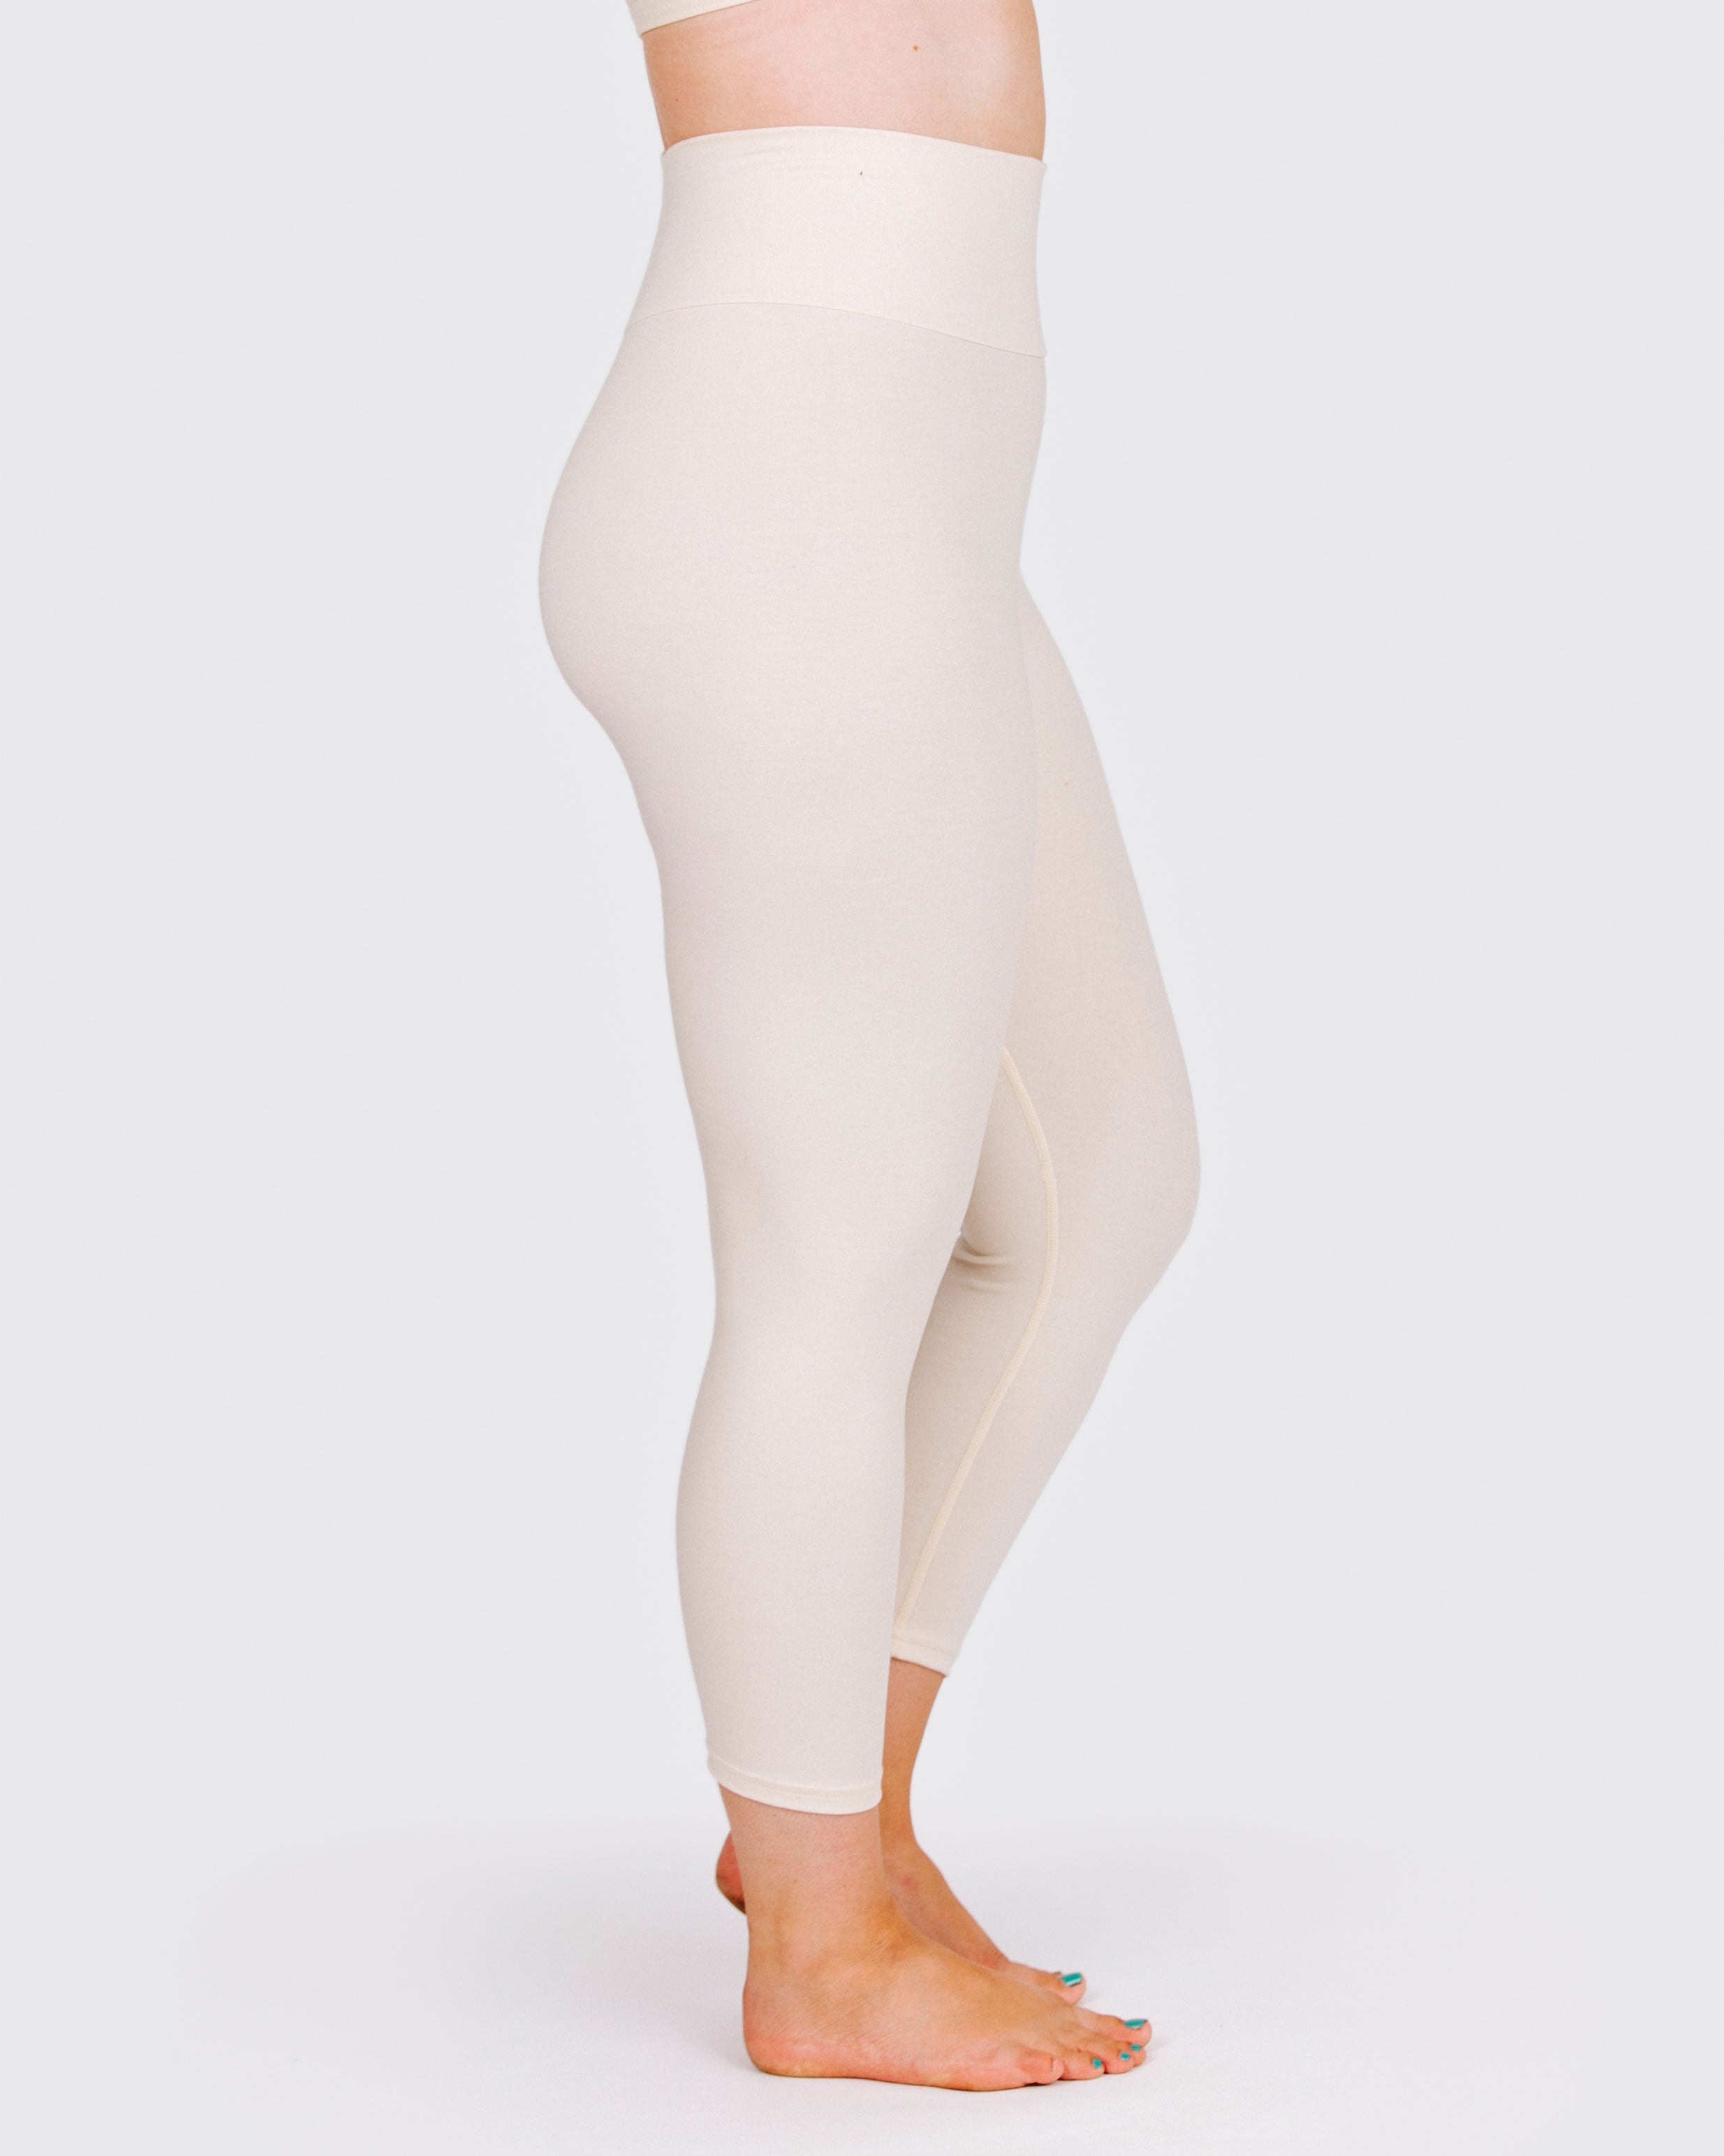 Buy Buy That Trendz Women's Skinny Fit Leggings 3/4 Capri Pack of 2 Combo  Large Black Dark Skin at Amazon.in